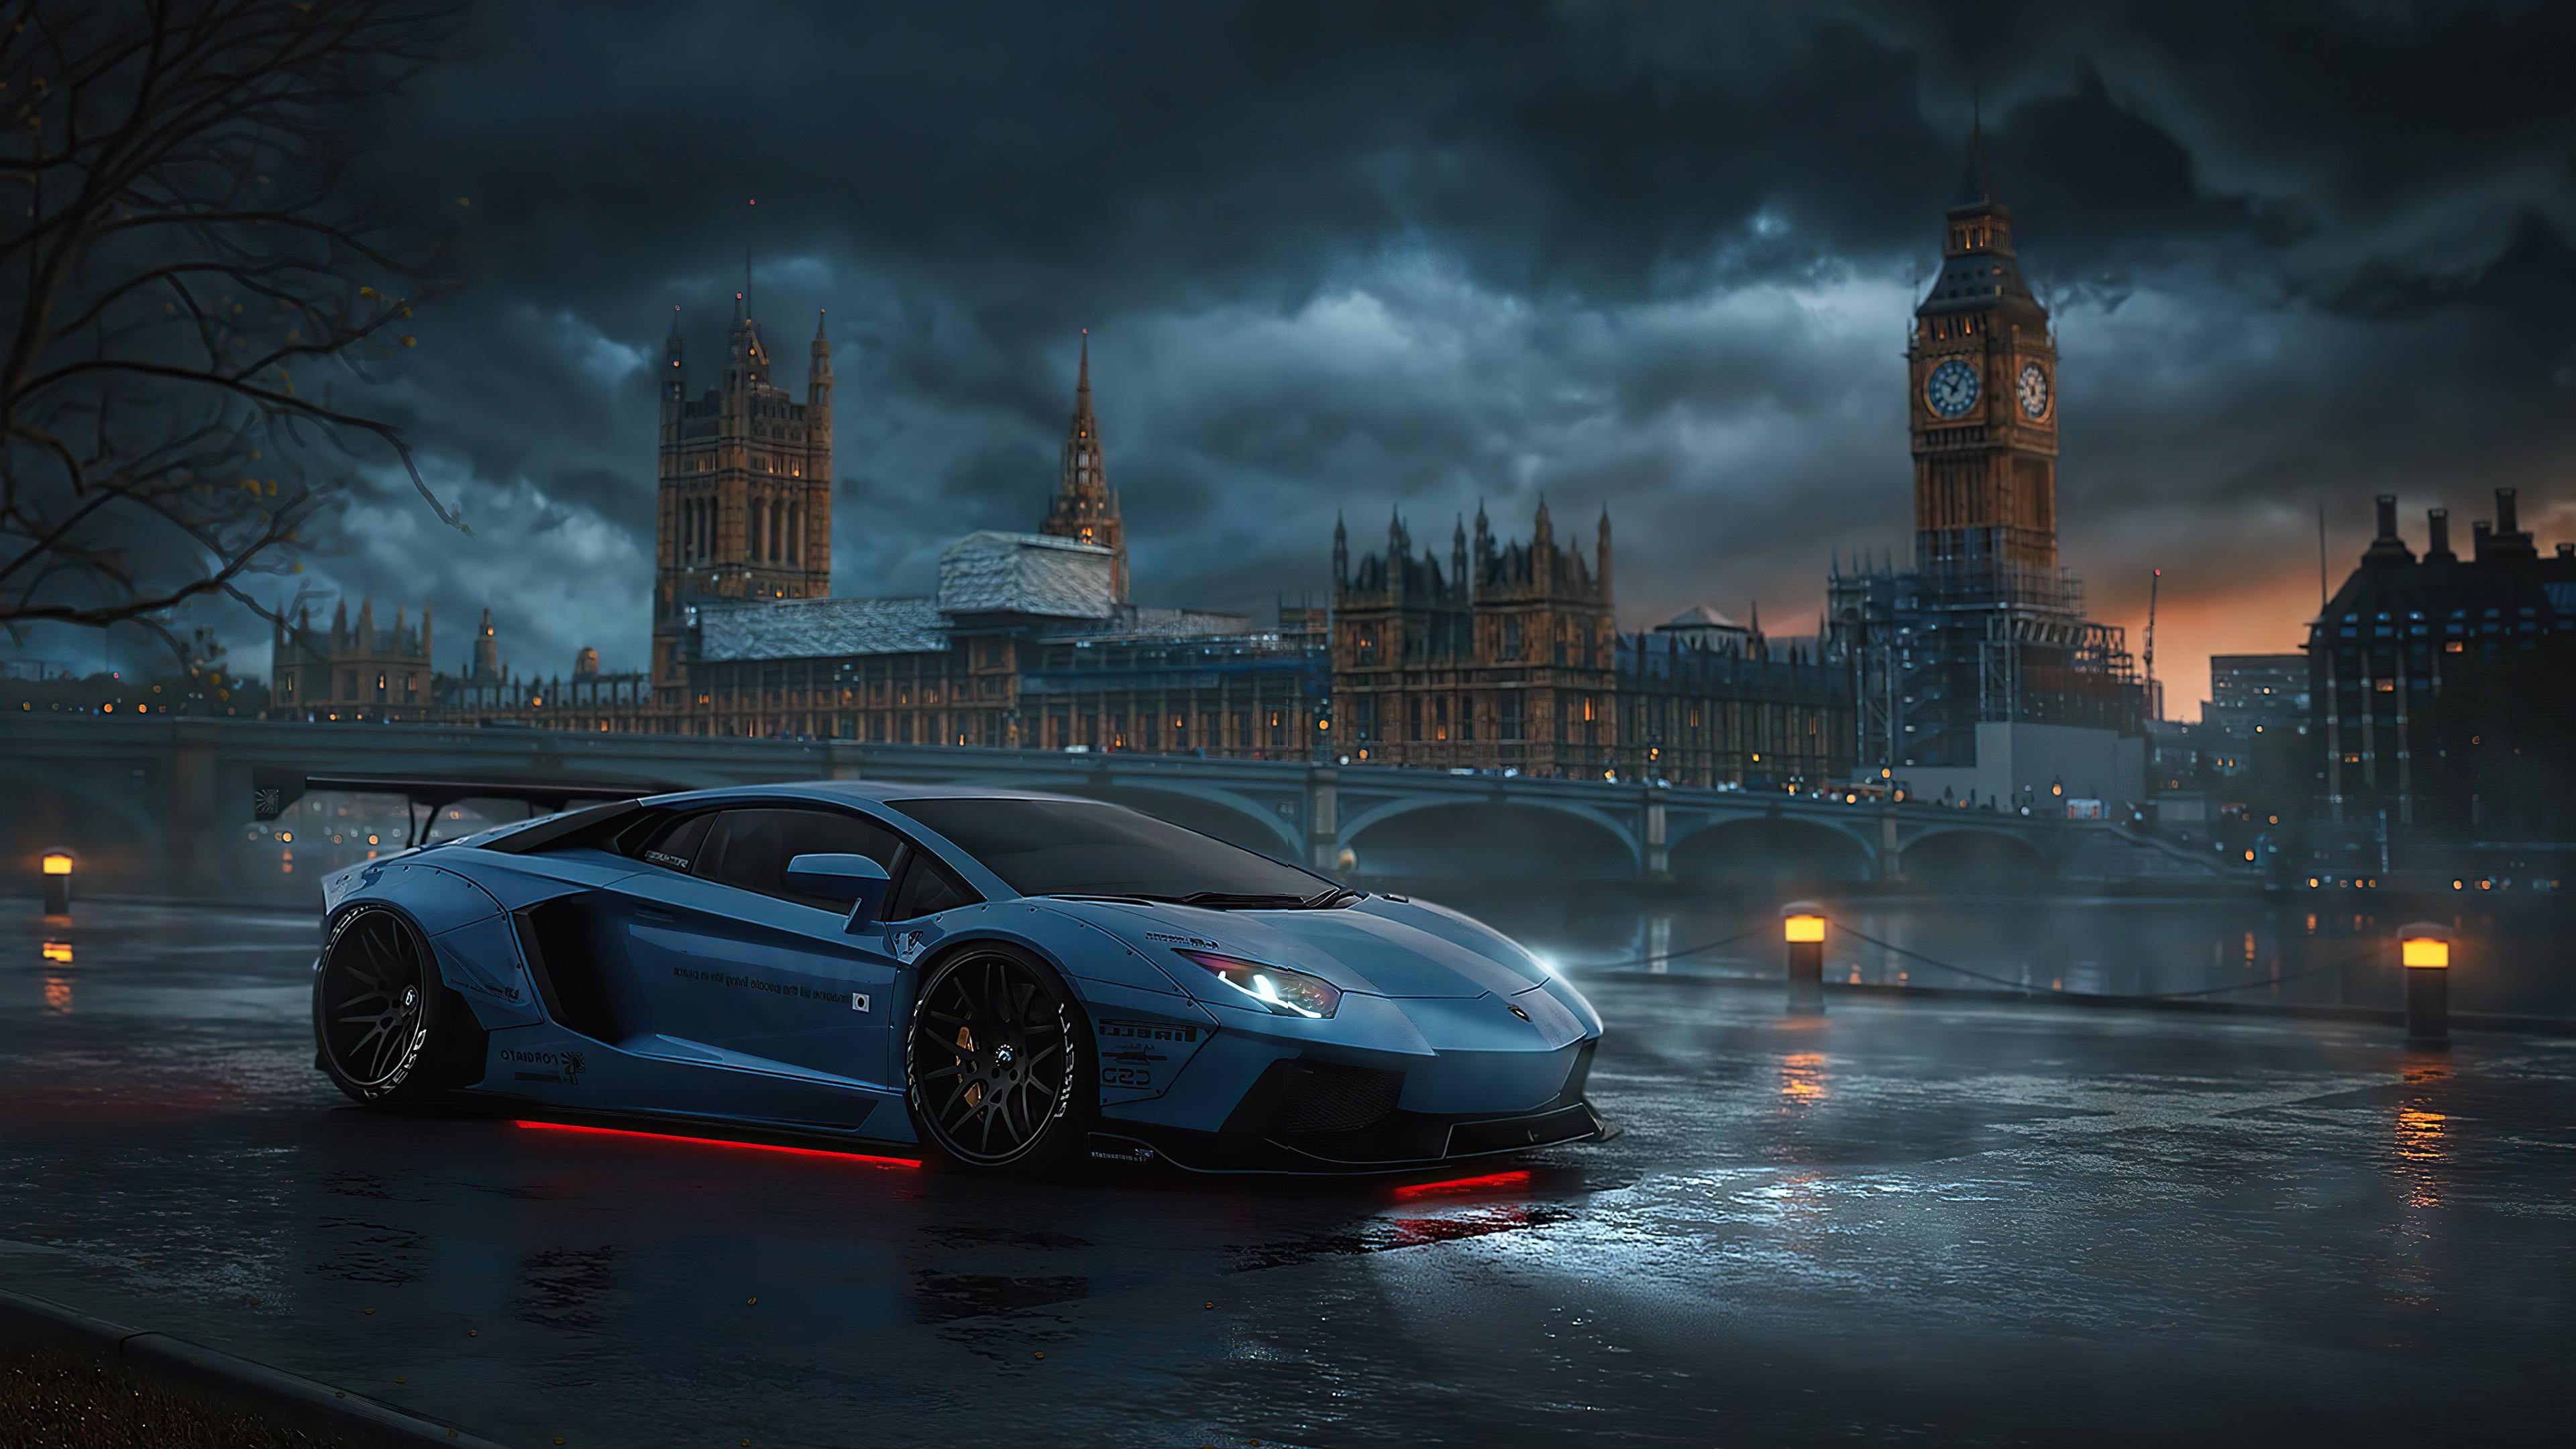 Lamborghini in London wallpaper - backiee